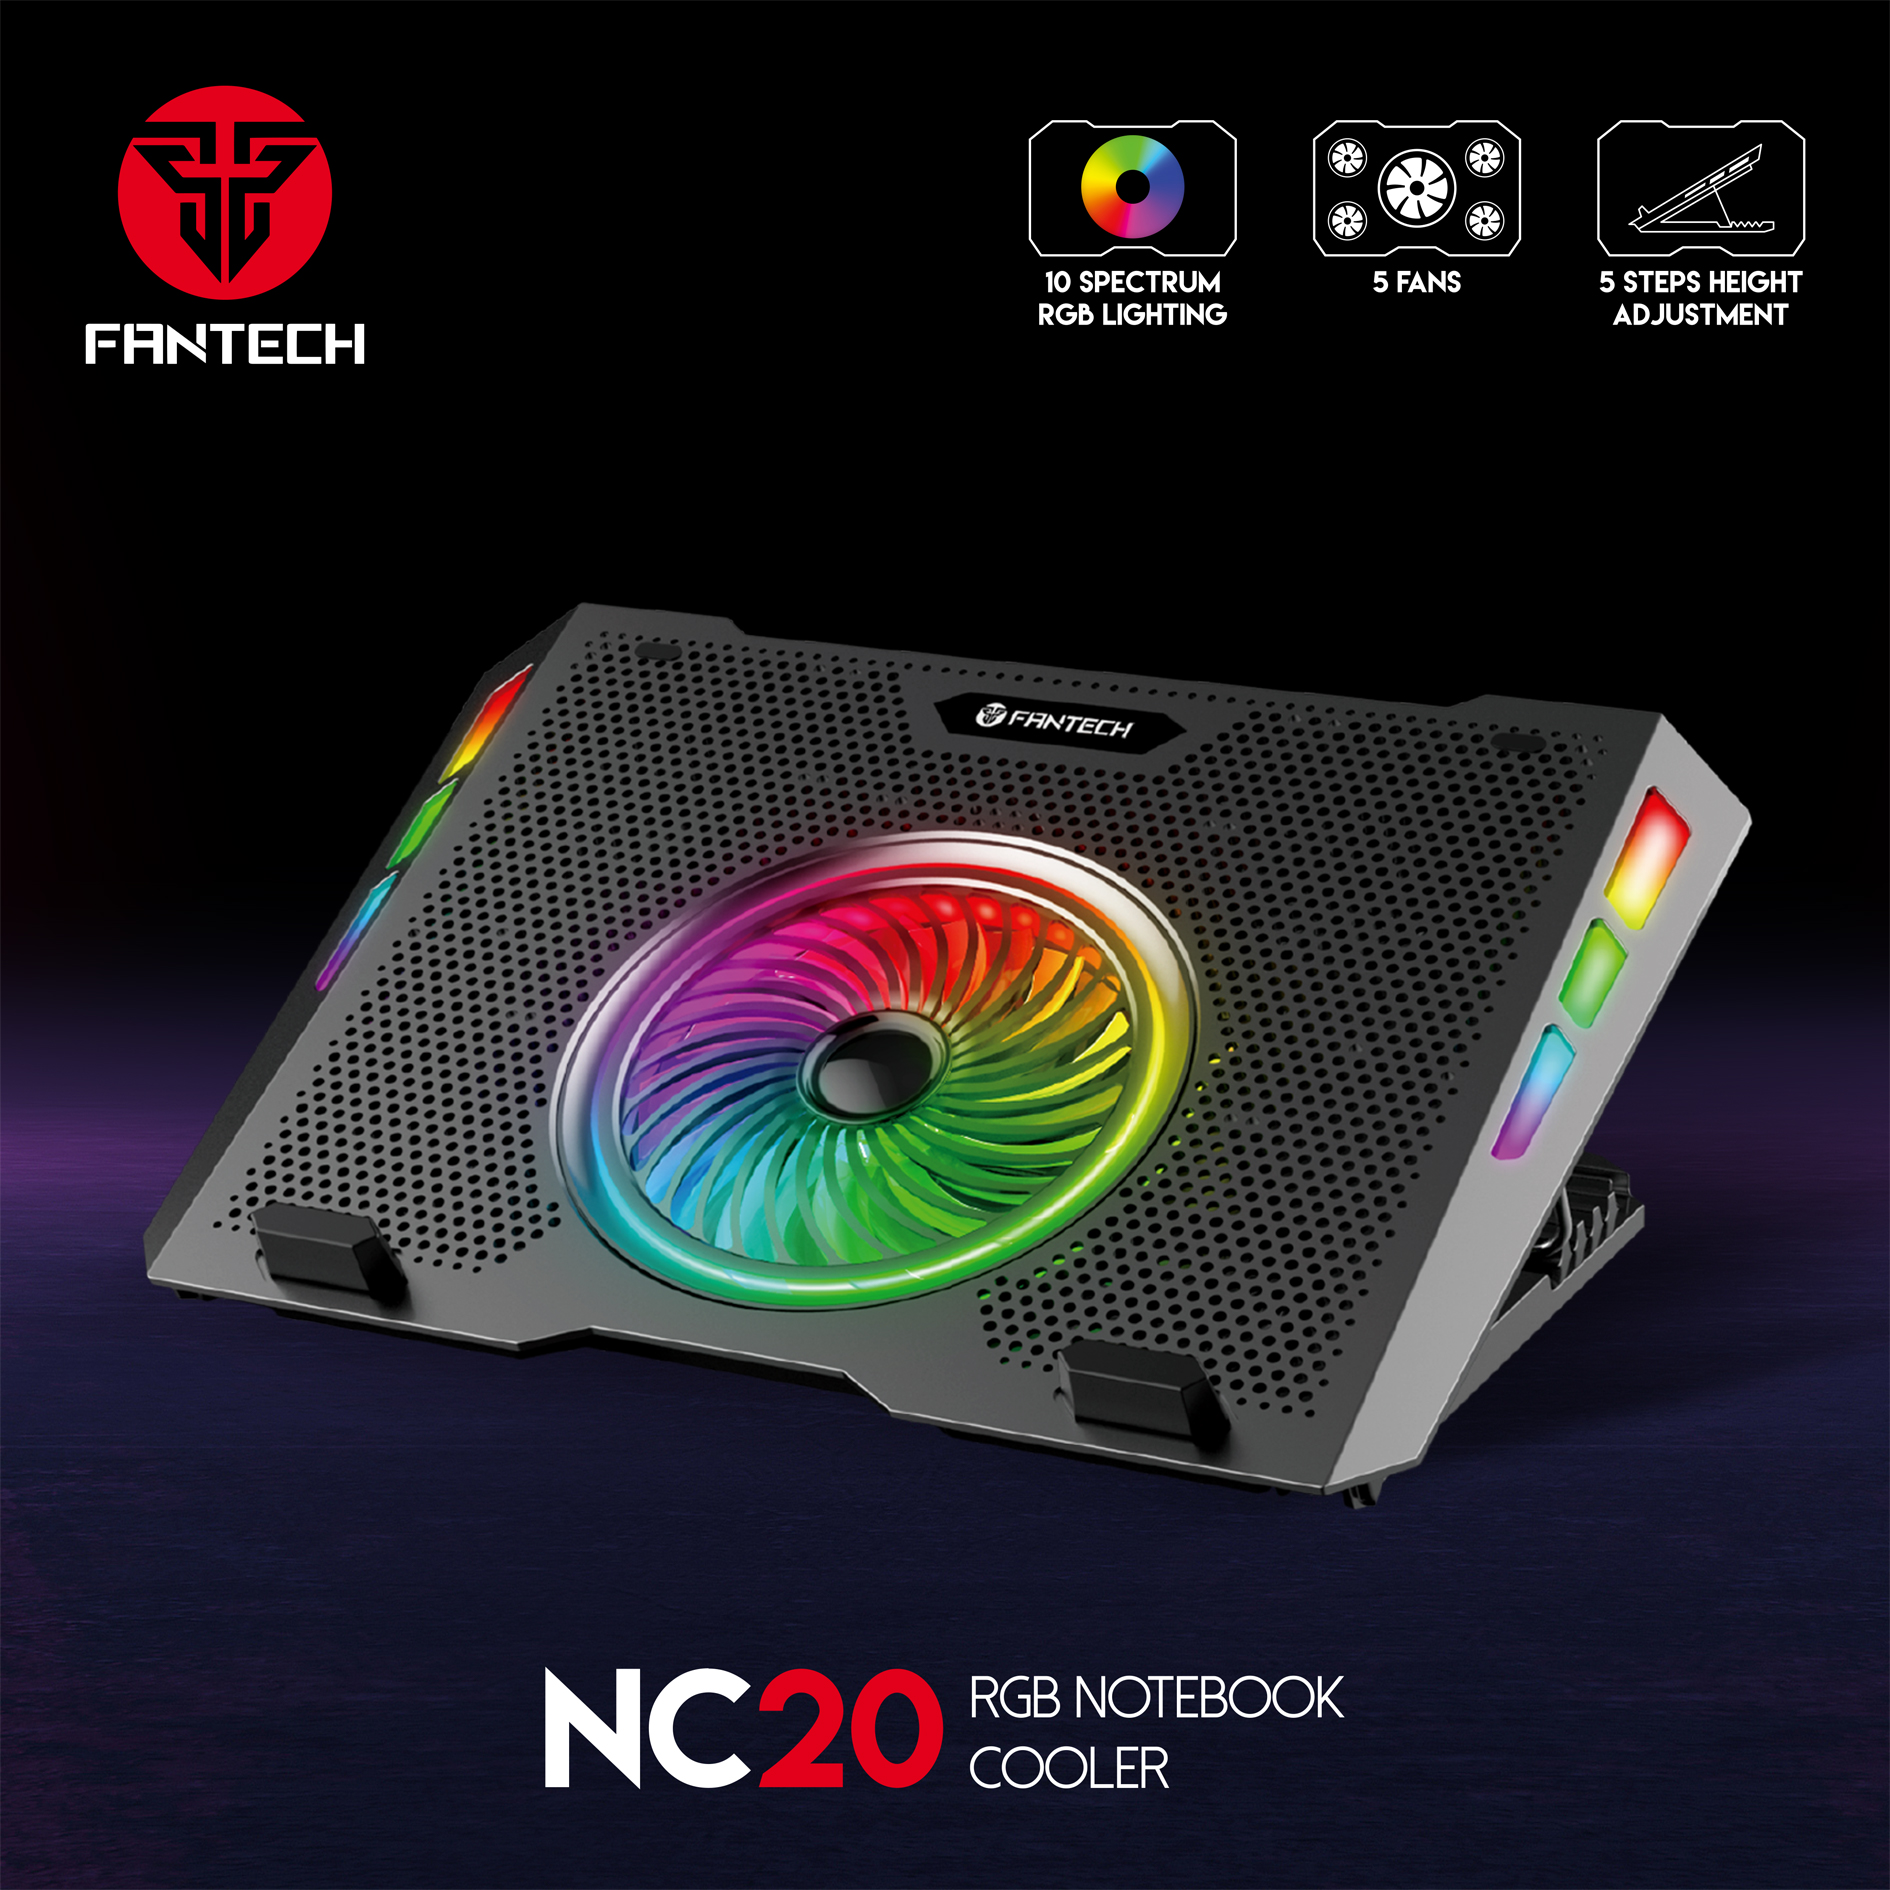 NC20 RGB Notebook Laptop Cooler Cooling Pad